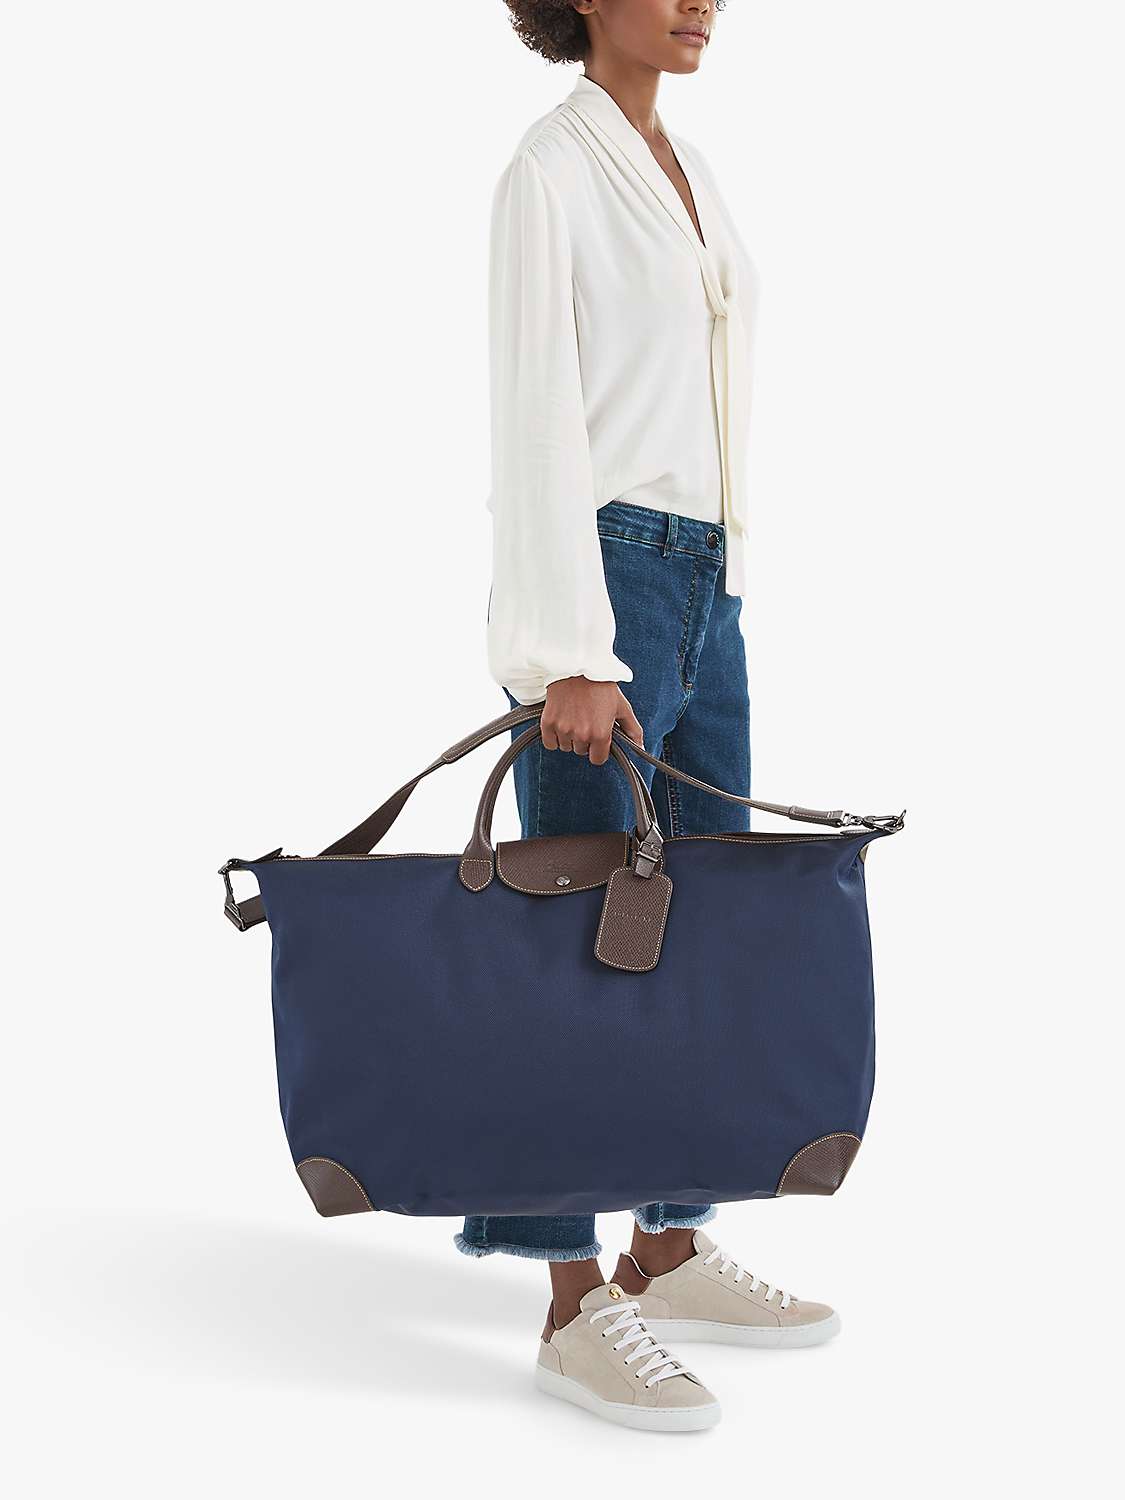 Buy Longchamp Boxford Extra Large Travel Bag Online at johnlewis.com